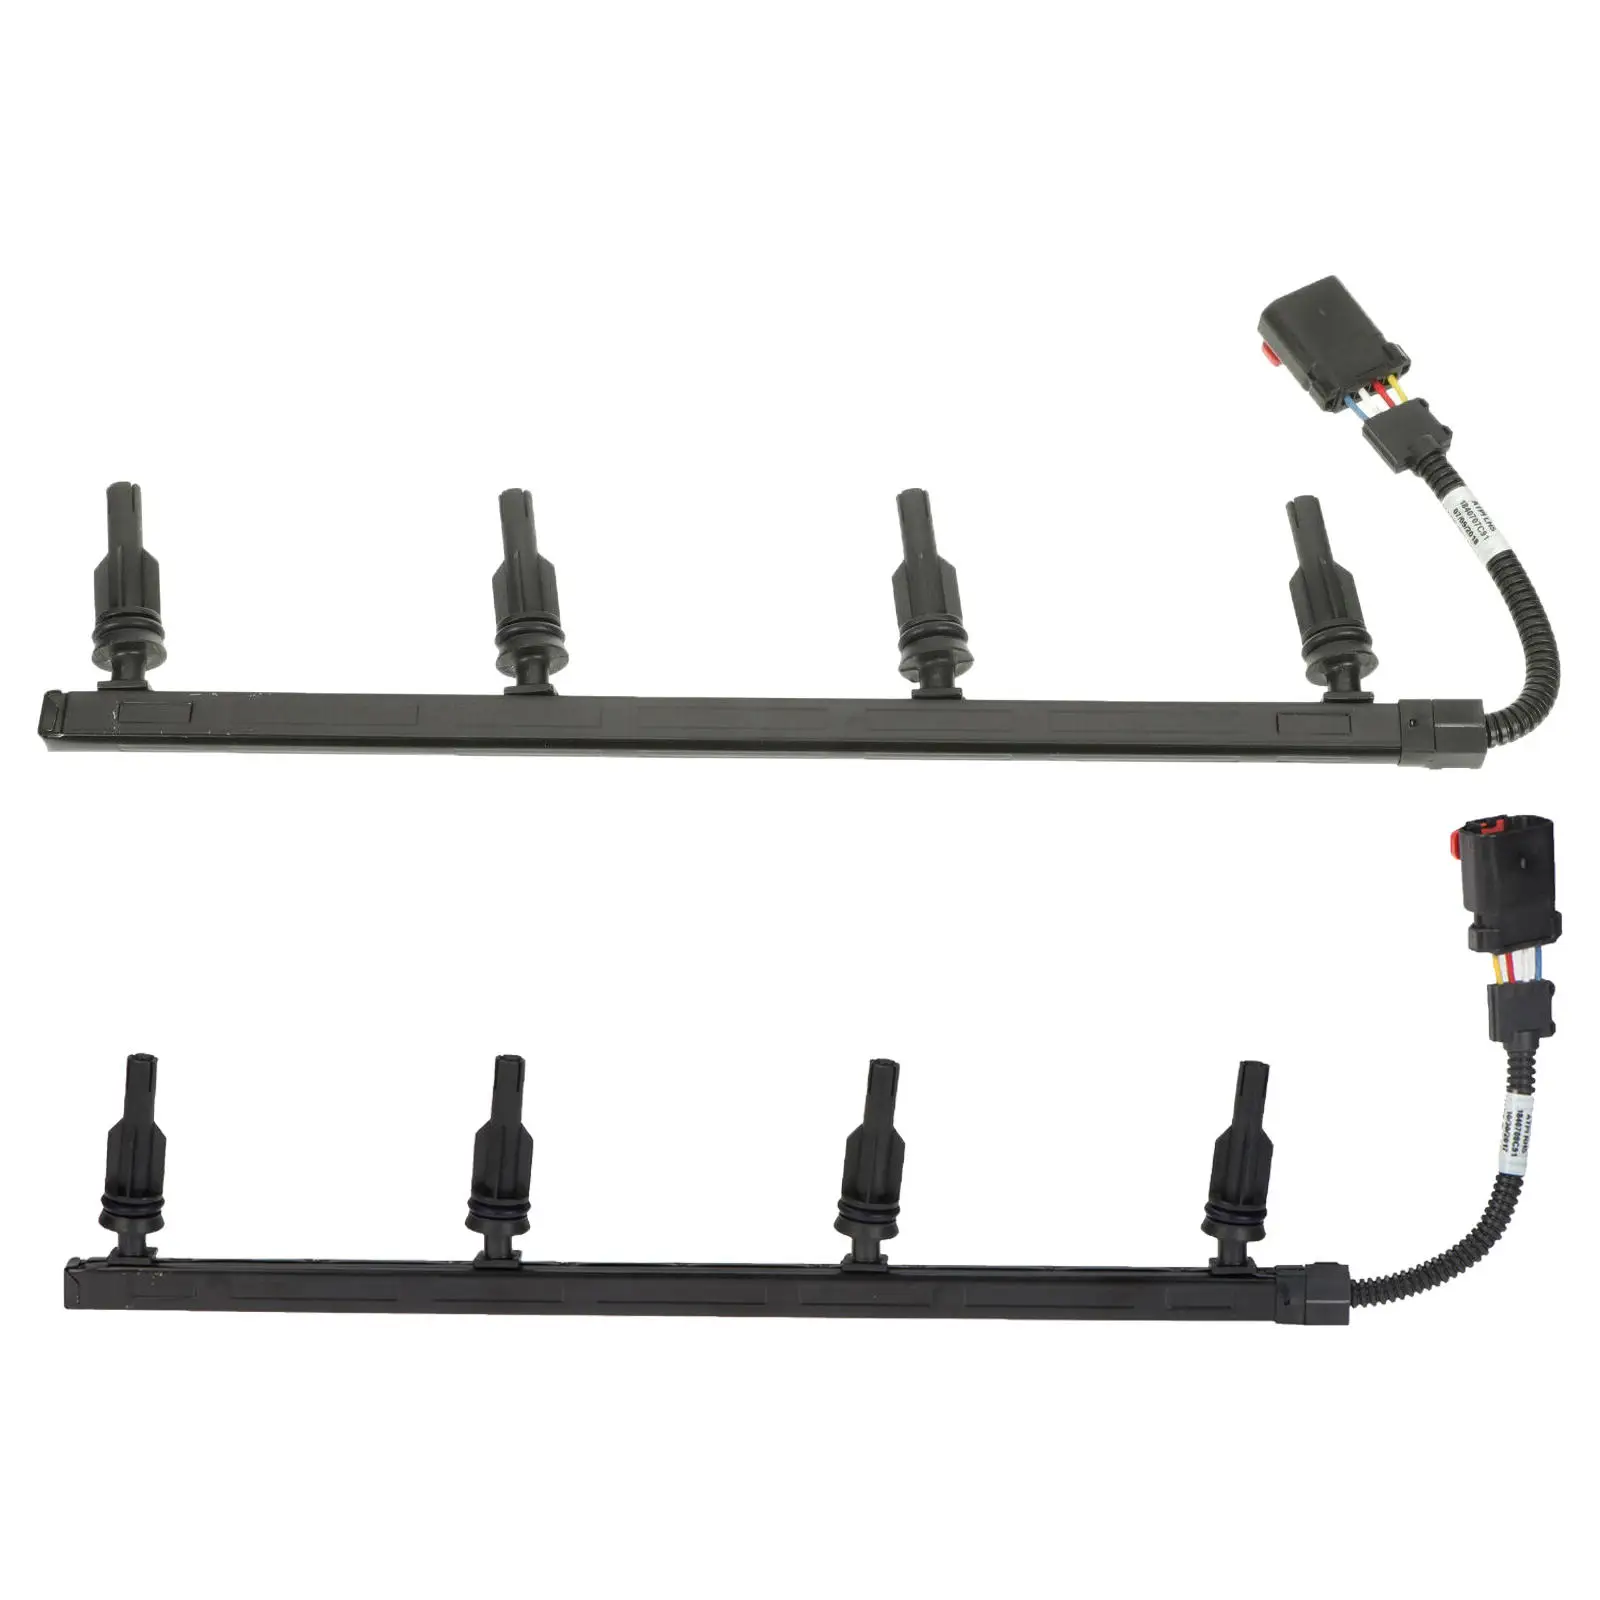 Glow Plug Wire Harness Fits for Ford 6.0L F350 F550 Super Duty Accessories Parts